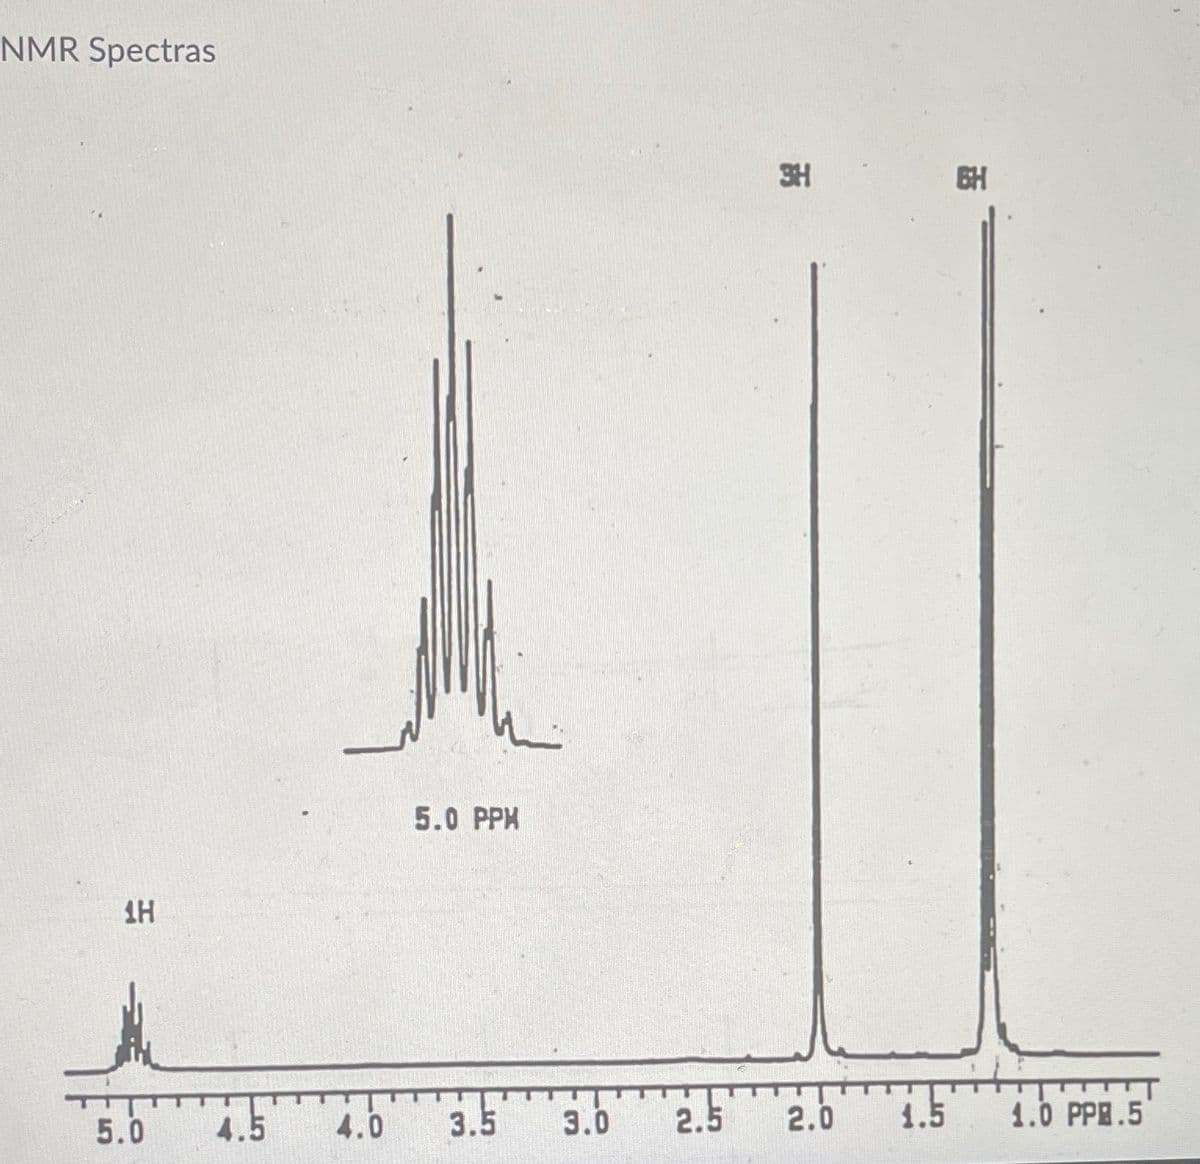 NMR Spectras
T
1H
5.0
4.5
4.0
5.0 PPM
3.5
3.0
2.5
露
3H
2.0
1.5
GH
1.0 PPB.5